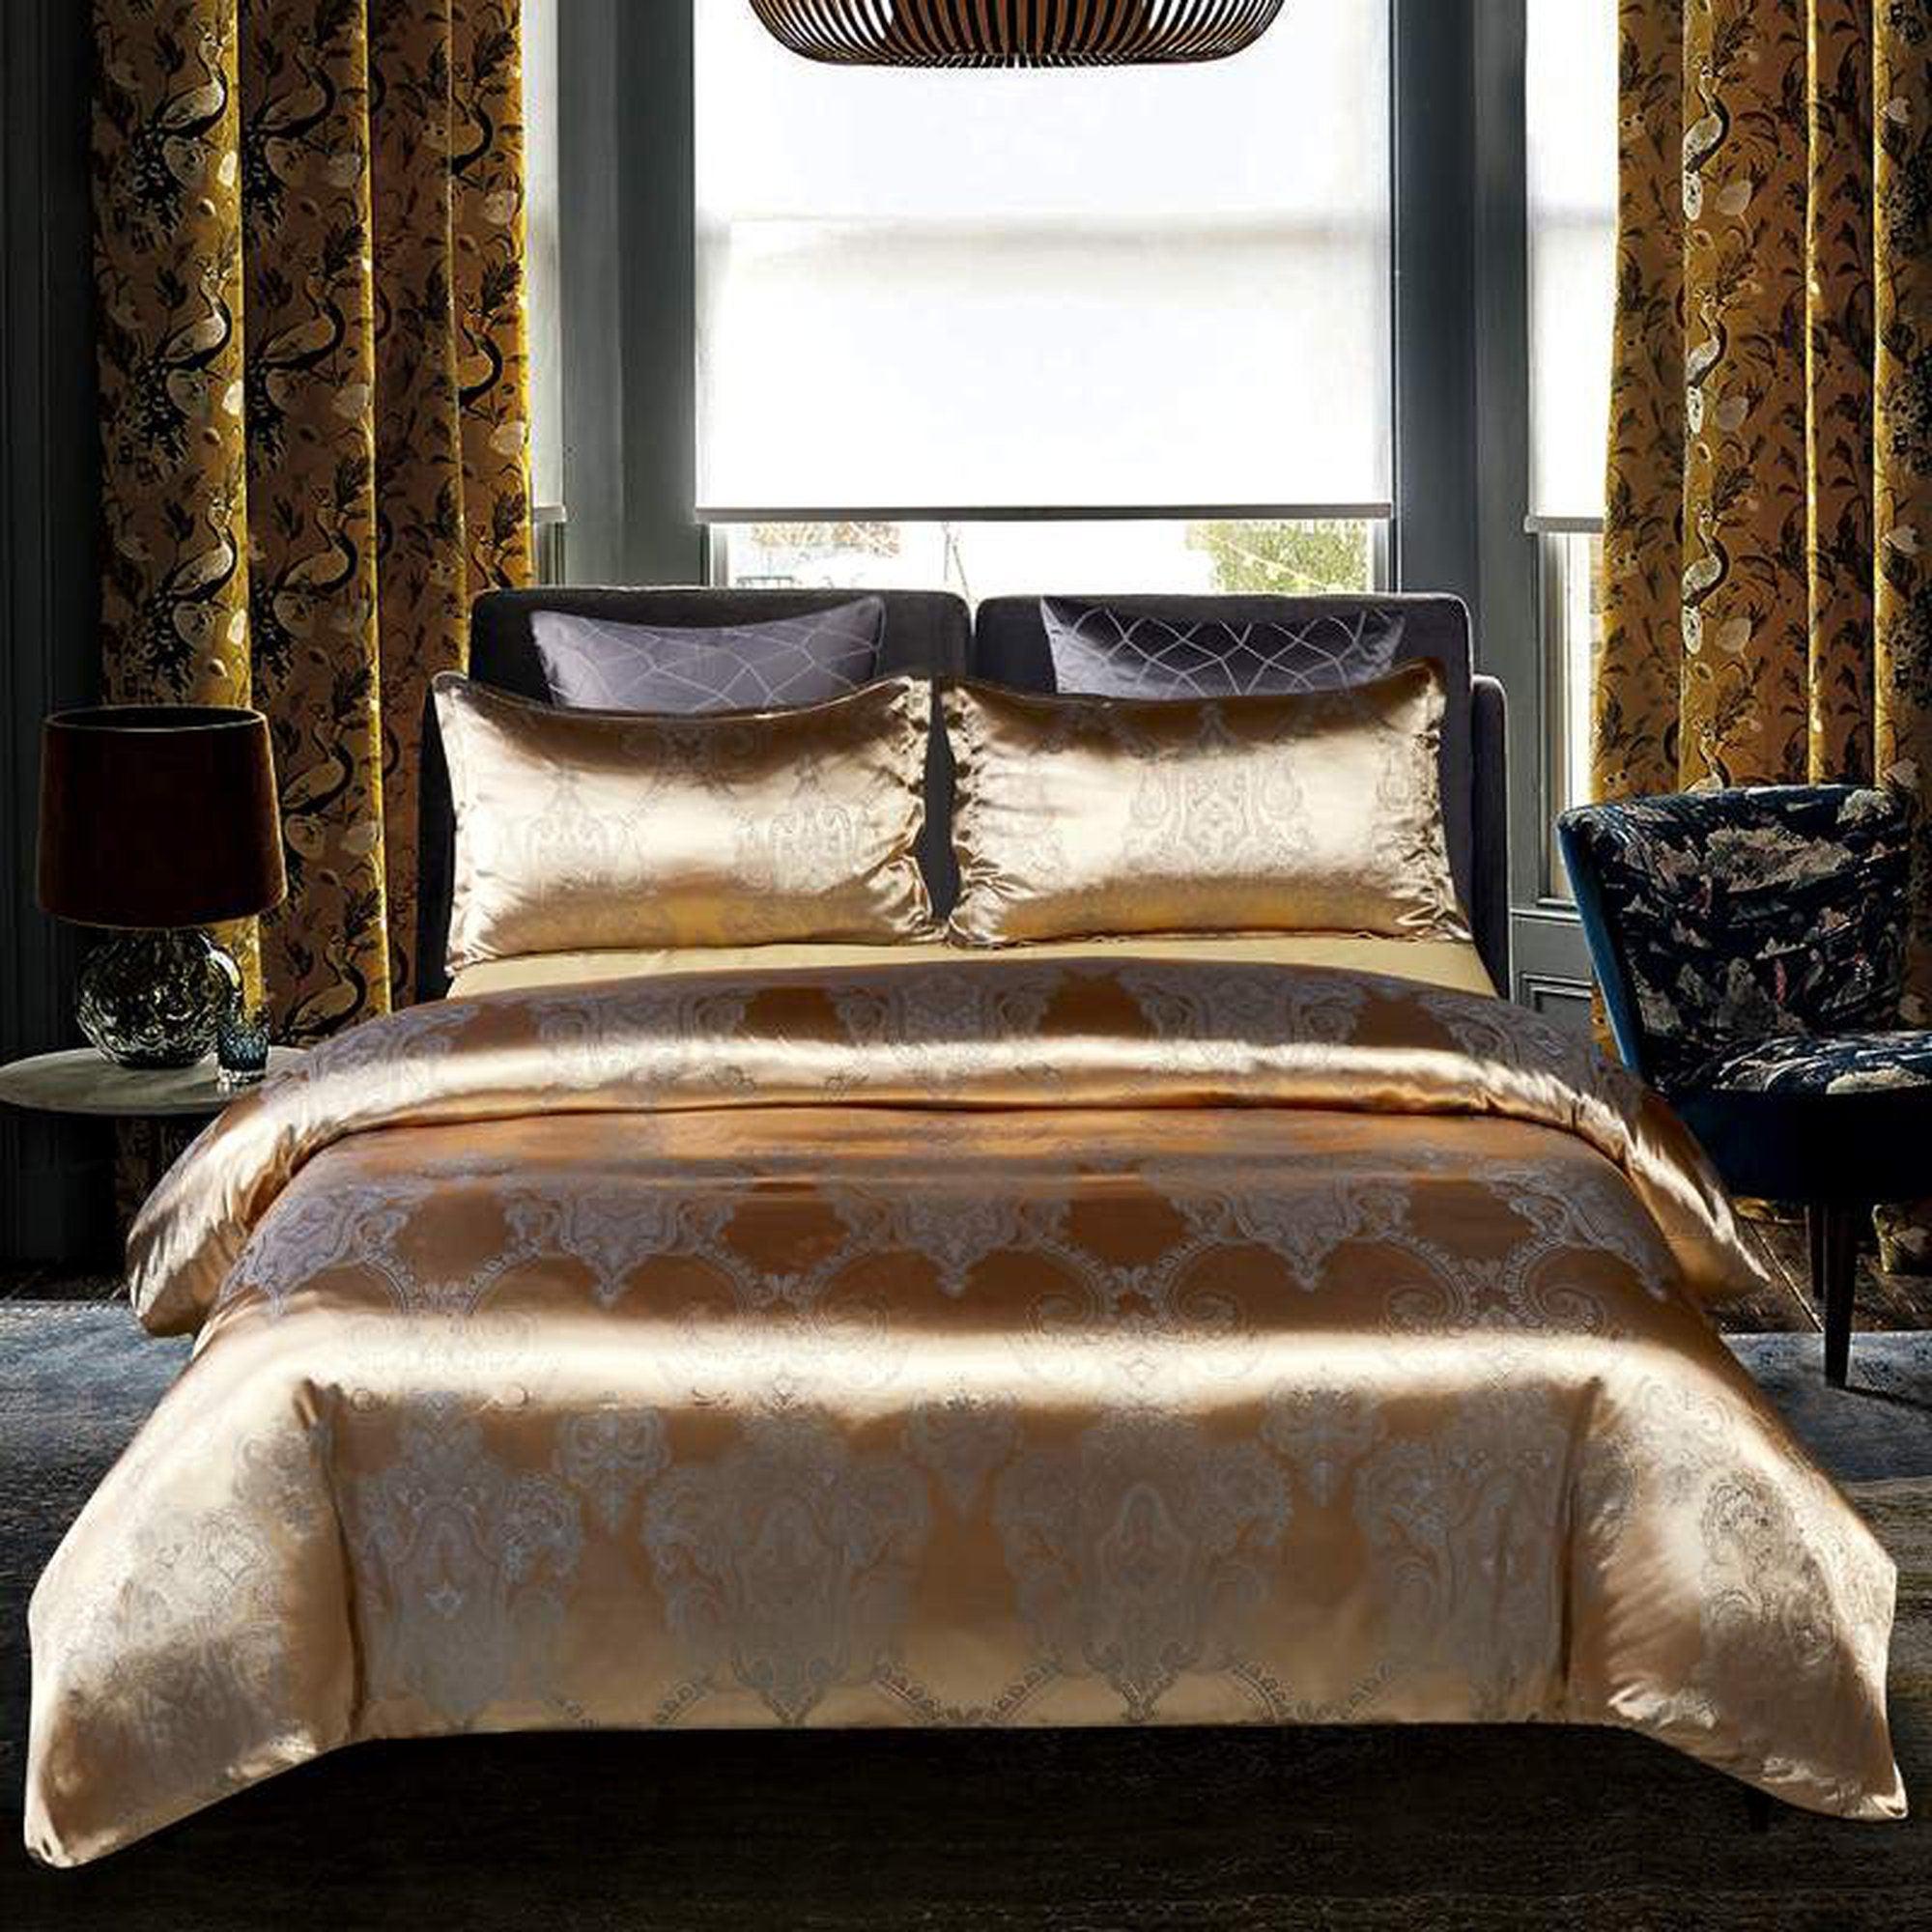 daintyduvet Luxury Duvet Cover Set Gold, Jacquard Fabric Aesthetic Bedding Decorative, Embroidered Bedding Set